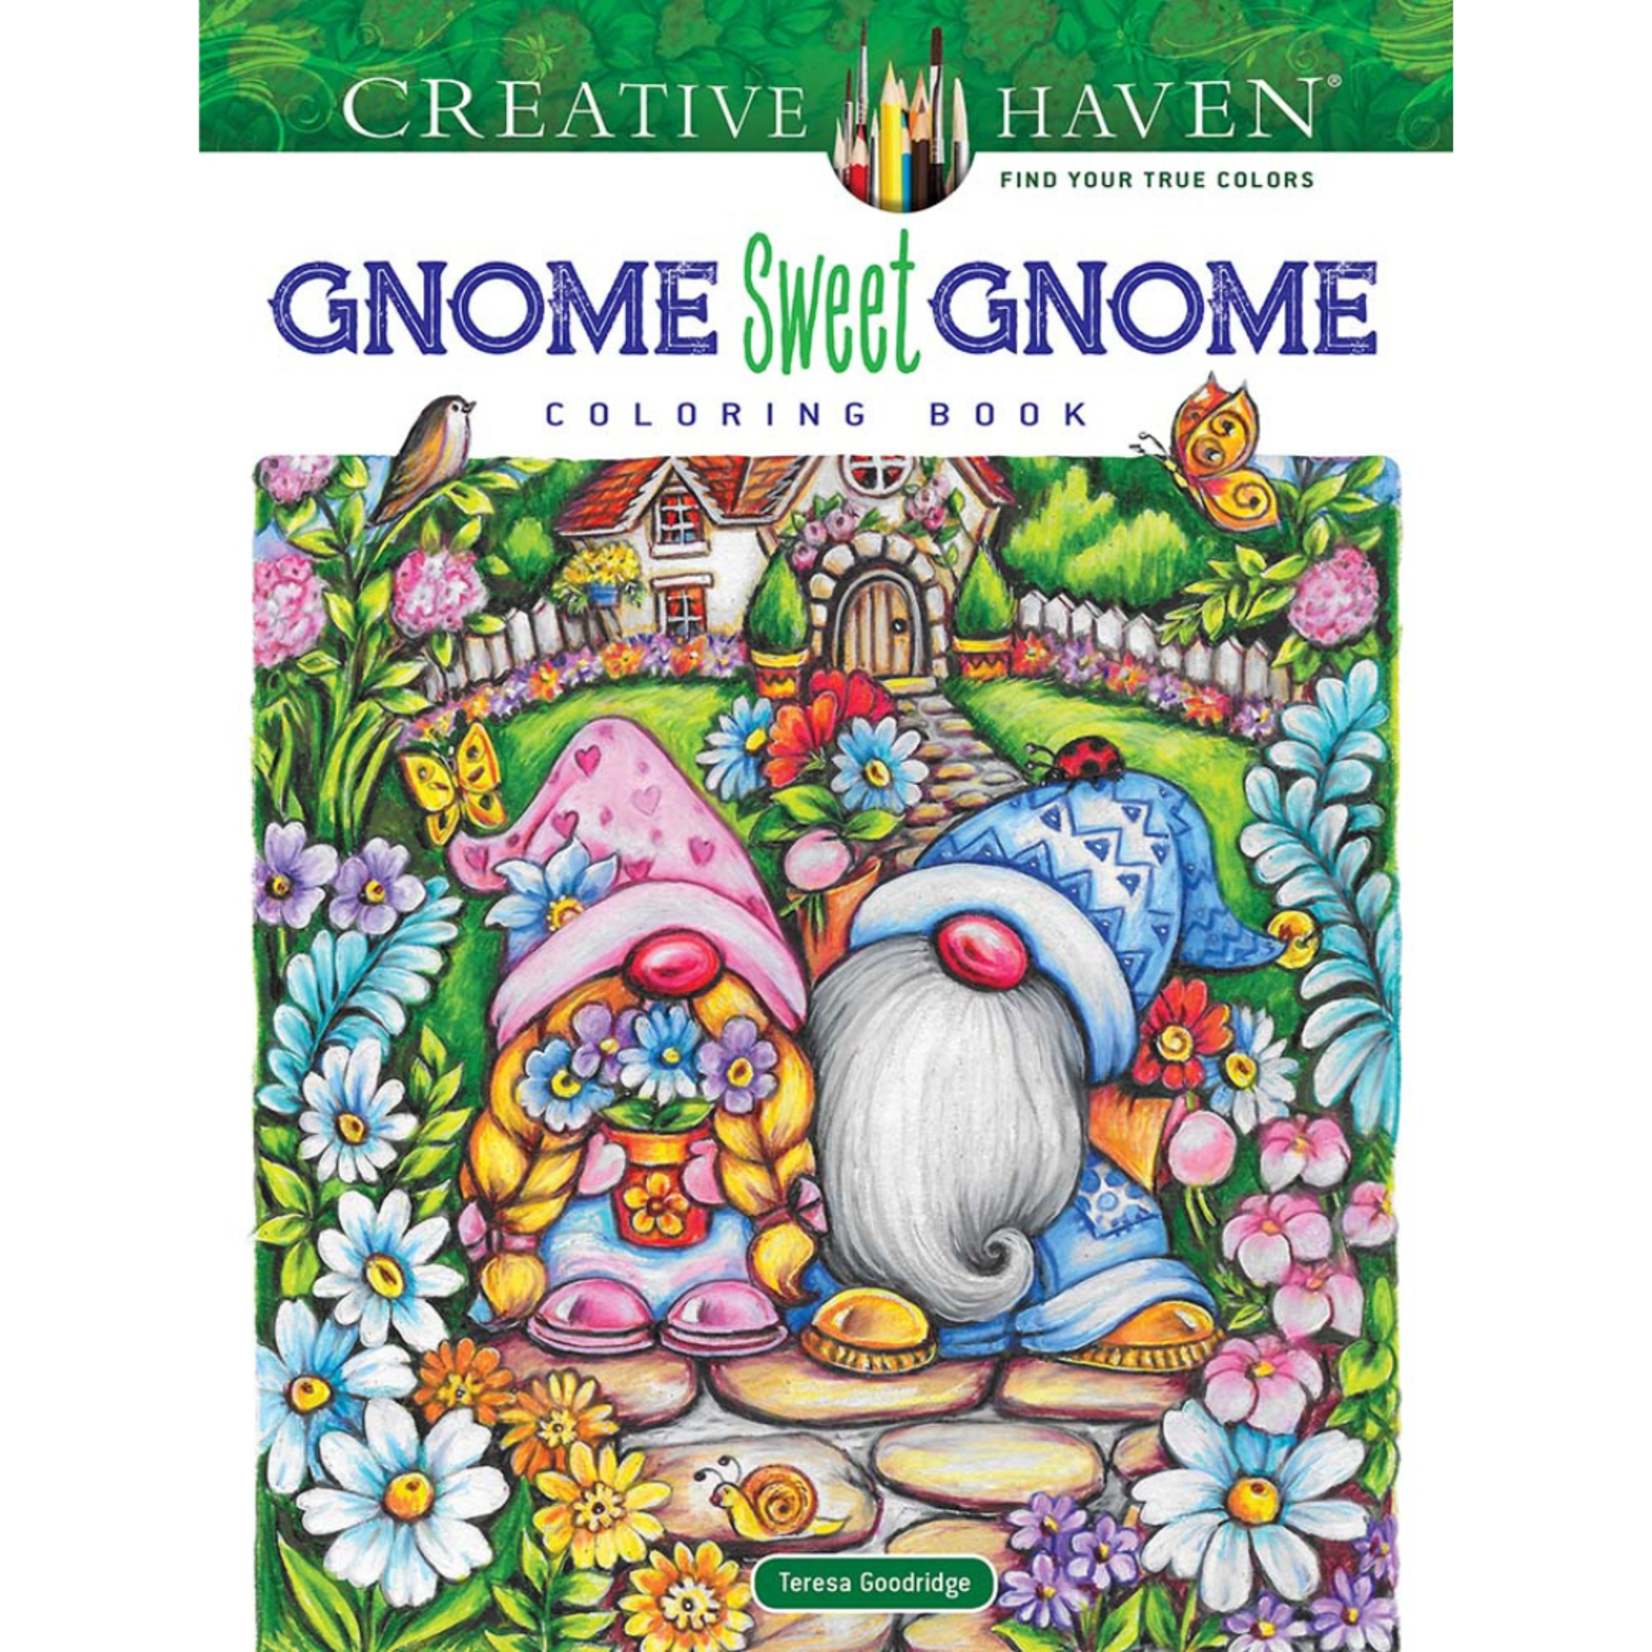 CREATIVE HAVEN COLOURING BOOK GNOME SWEET GNOME